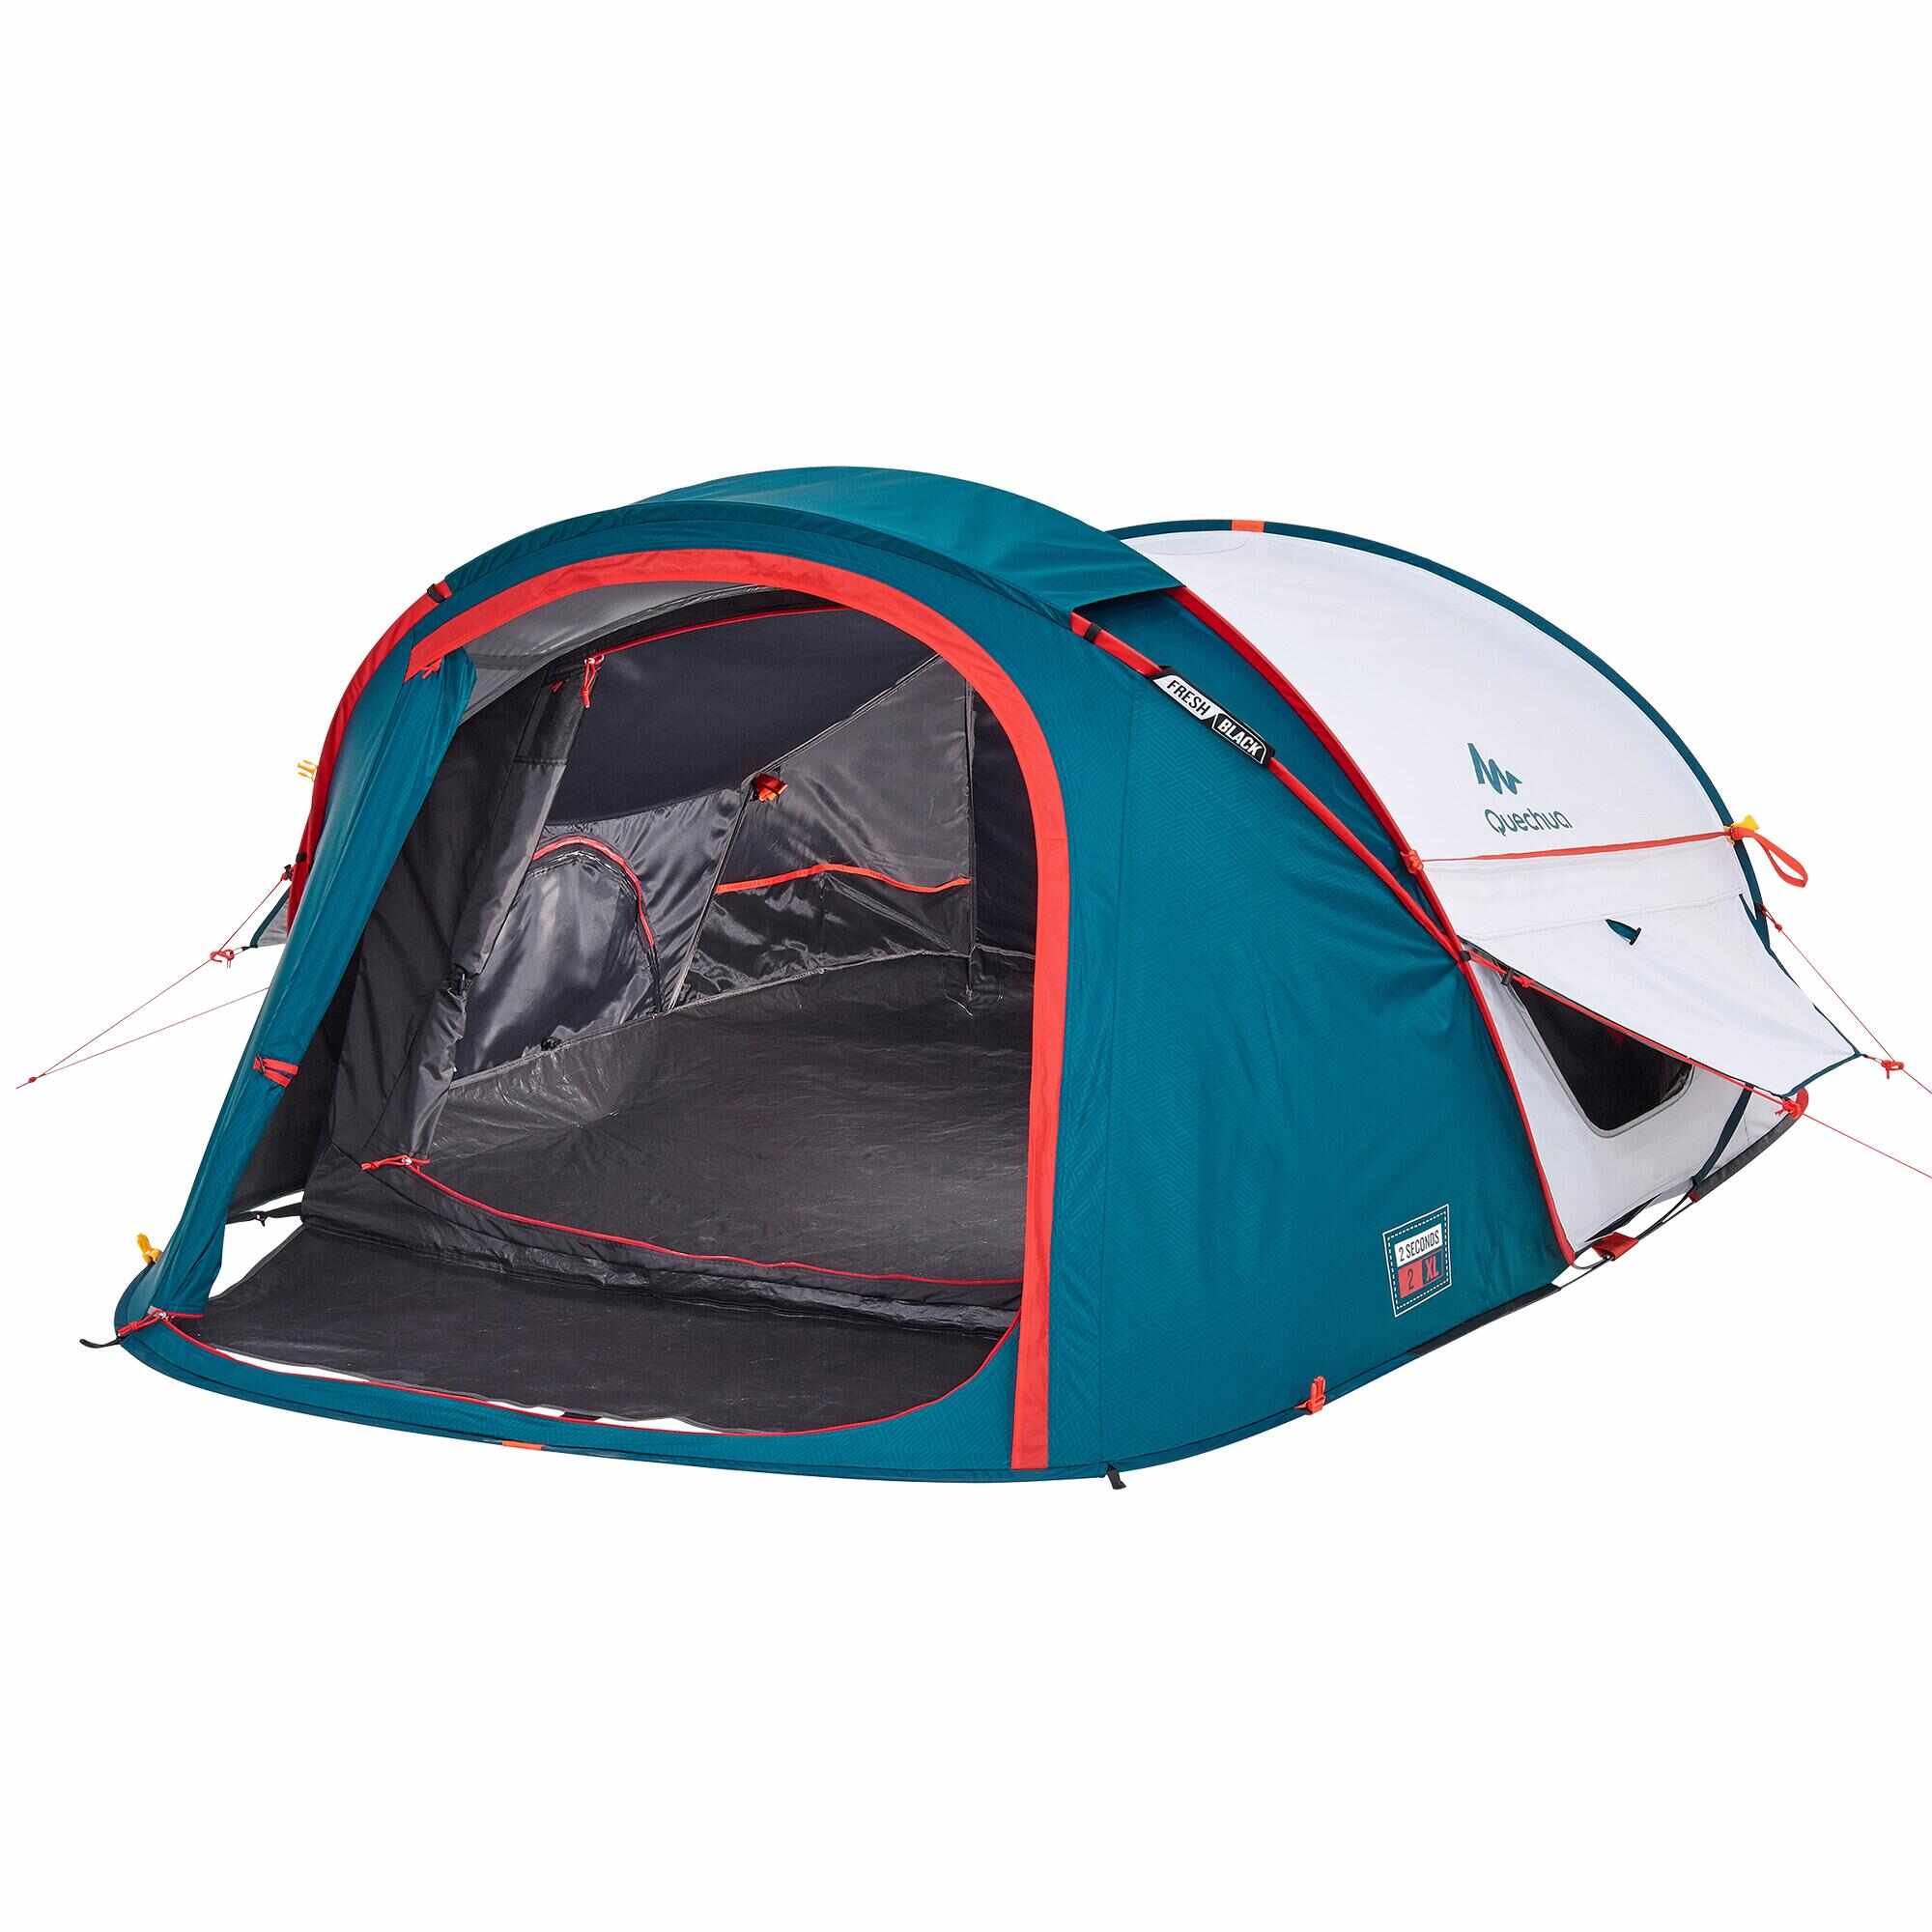 Cort camping 2 SECONDS XL FRESH&BLACK 2 persoane